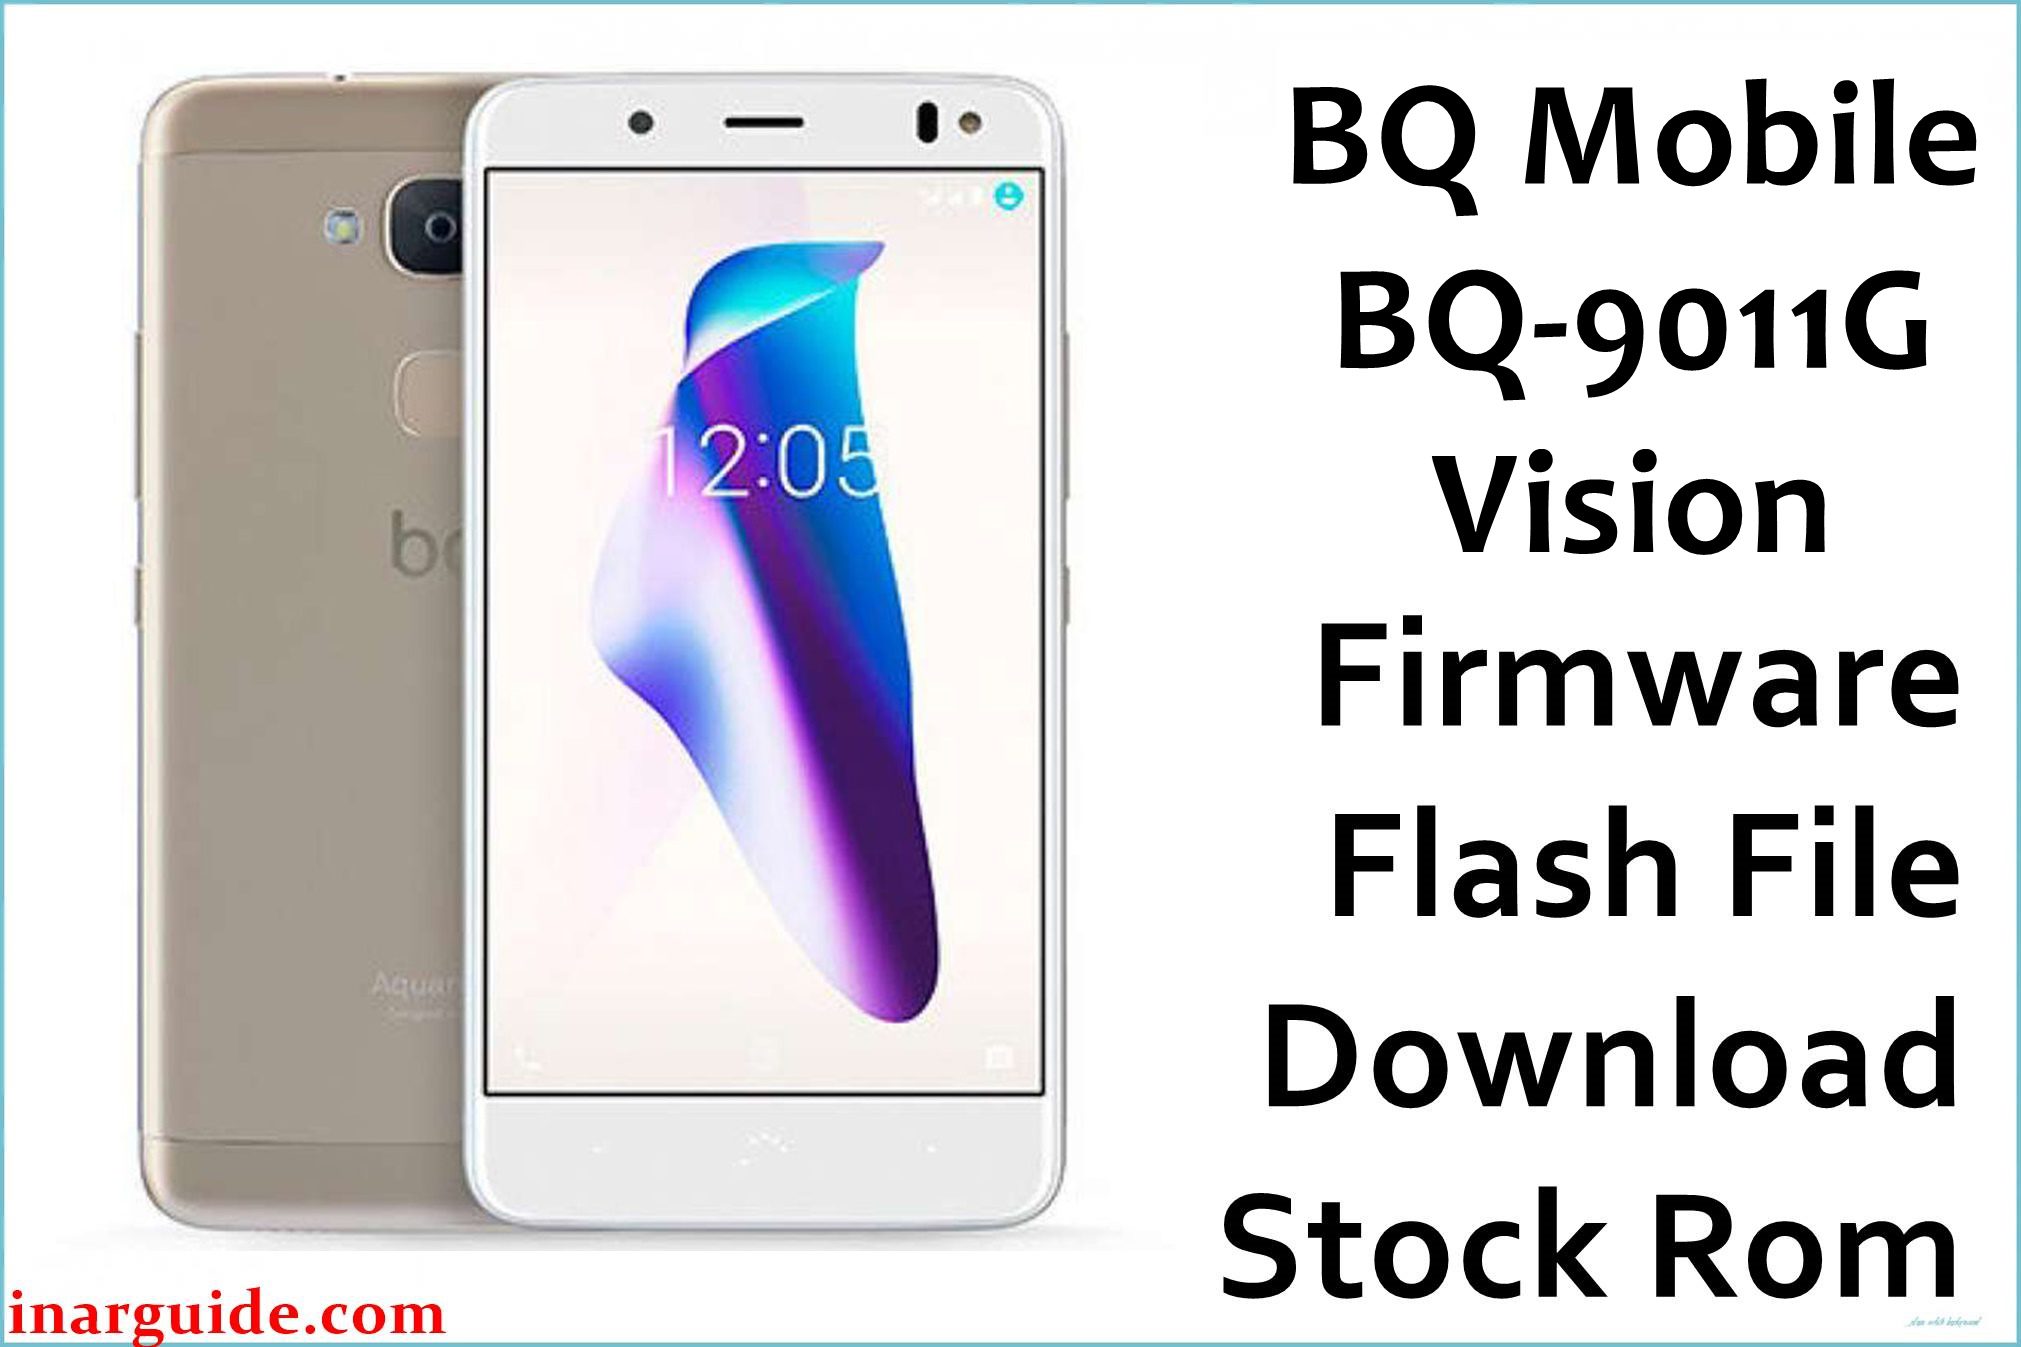 BQ Mobile BQ 9011G Vision